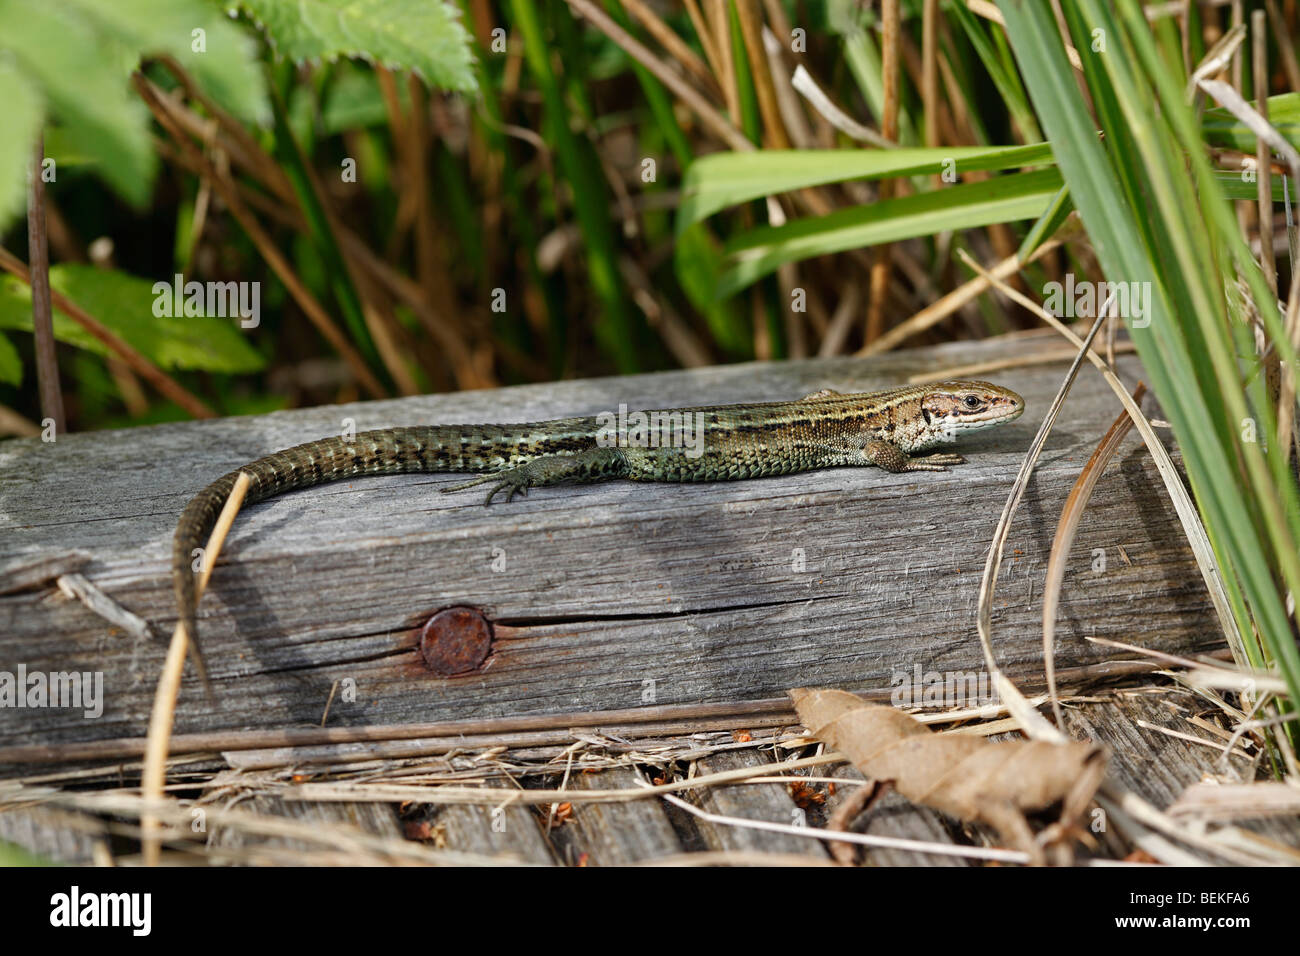 Common lizard (Lacerta vivipara) basking on boardwalk side view Stock Photo